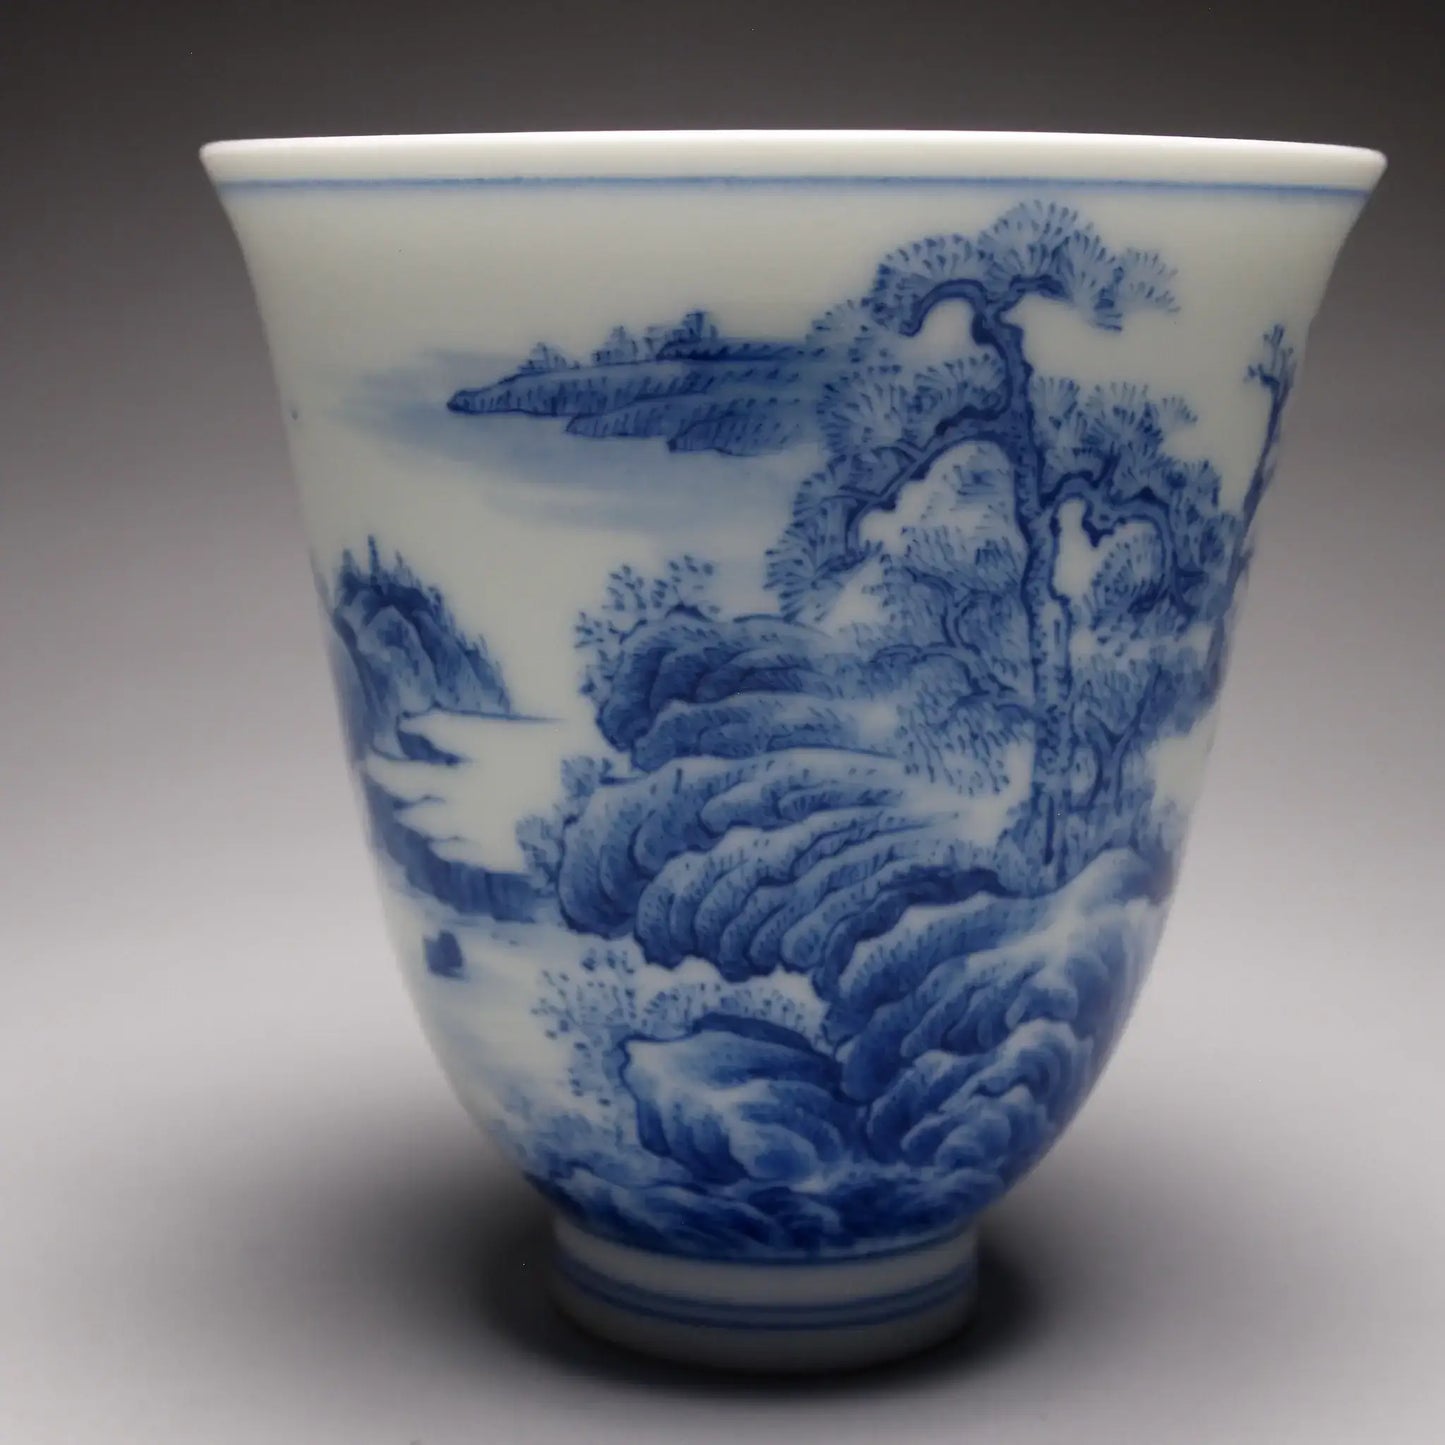 Qinghua Landscape Flower Goddess Jingdezhen Porcelain Teacup